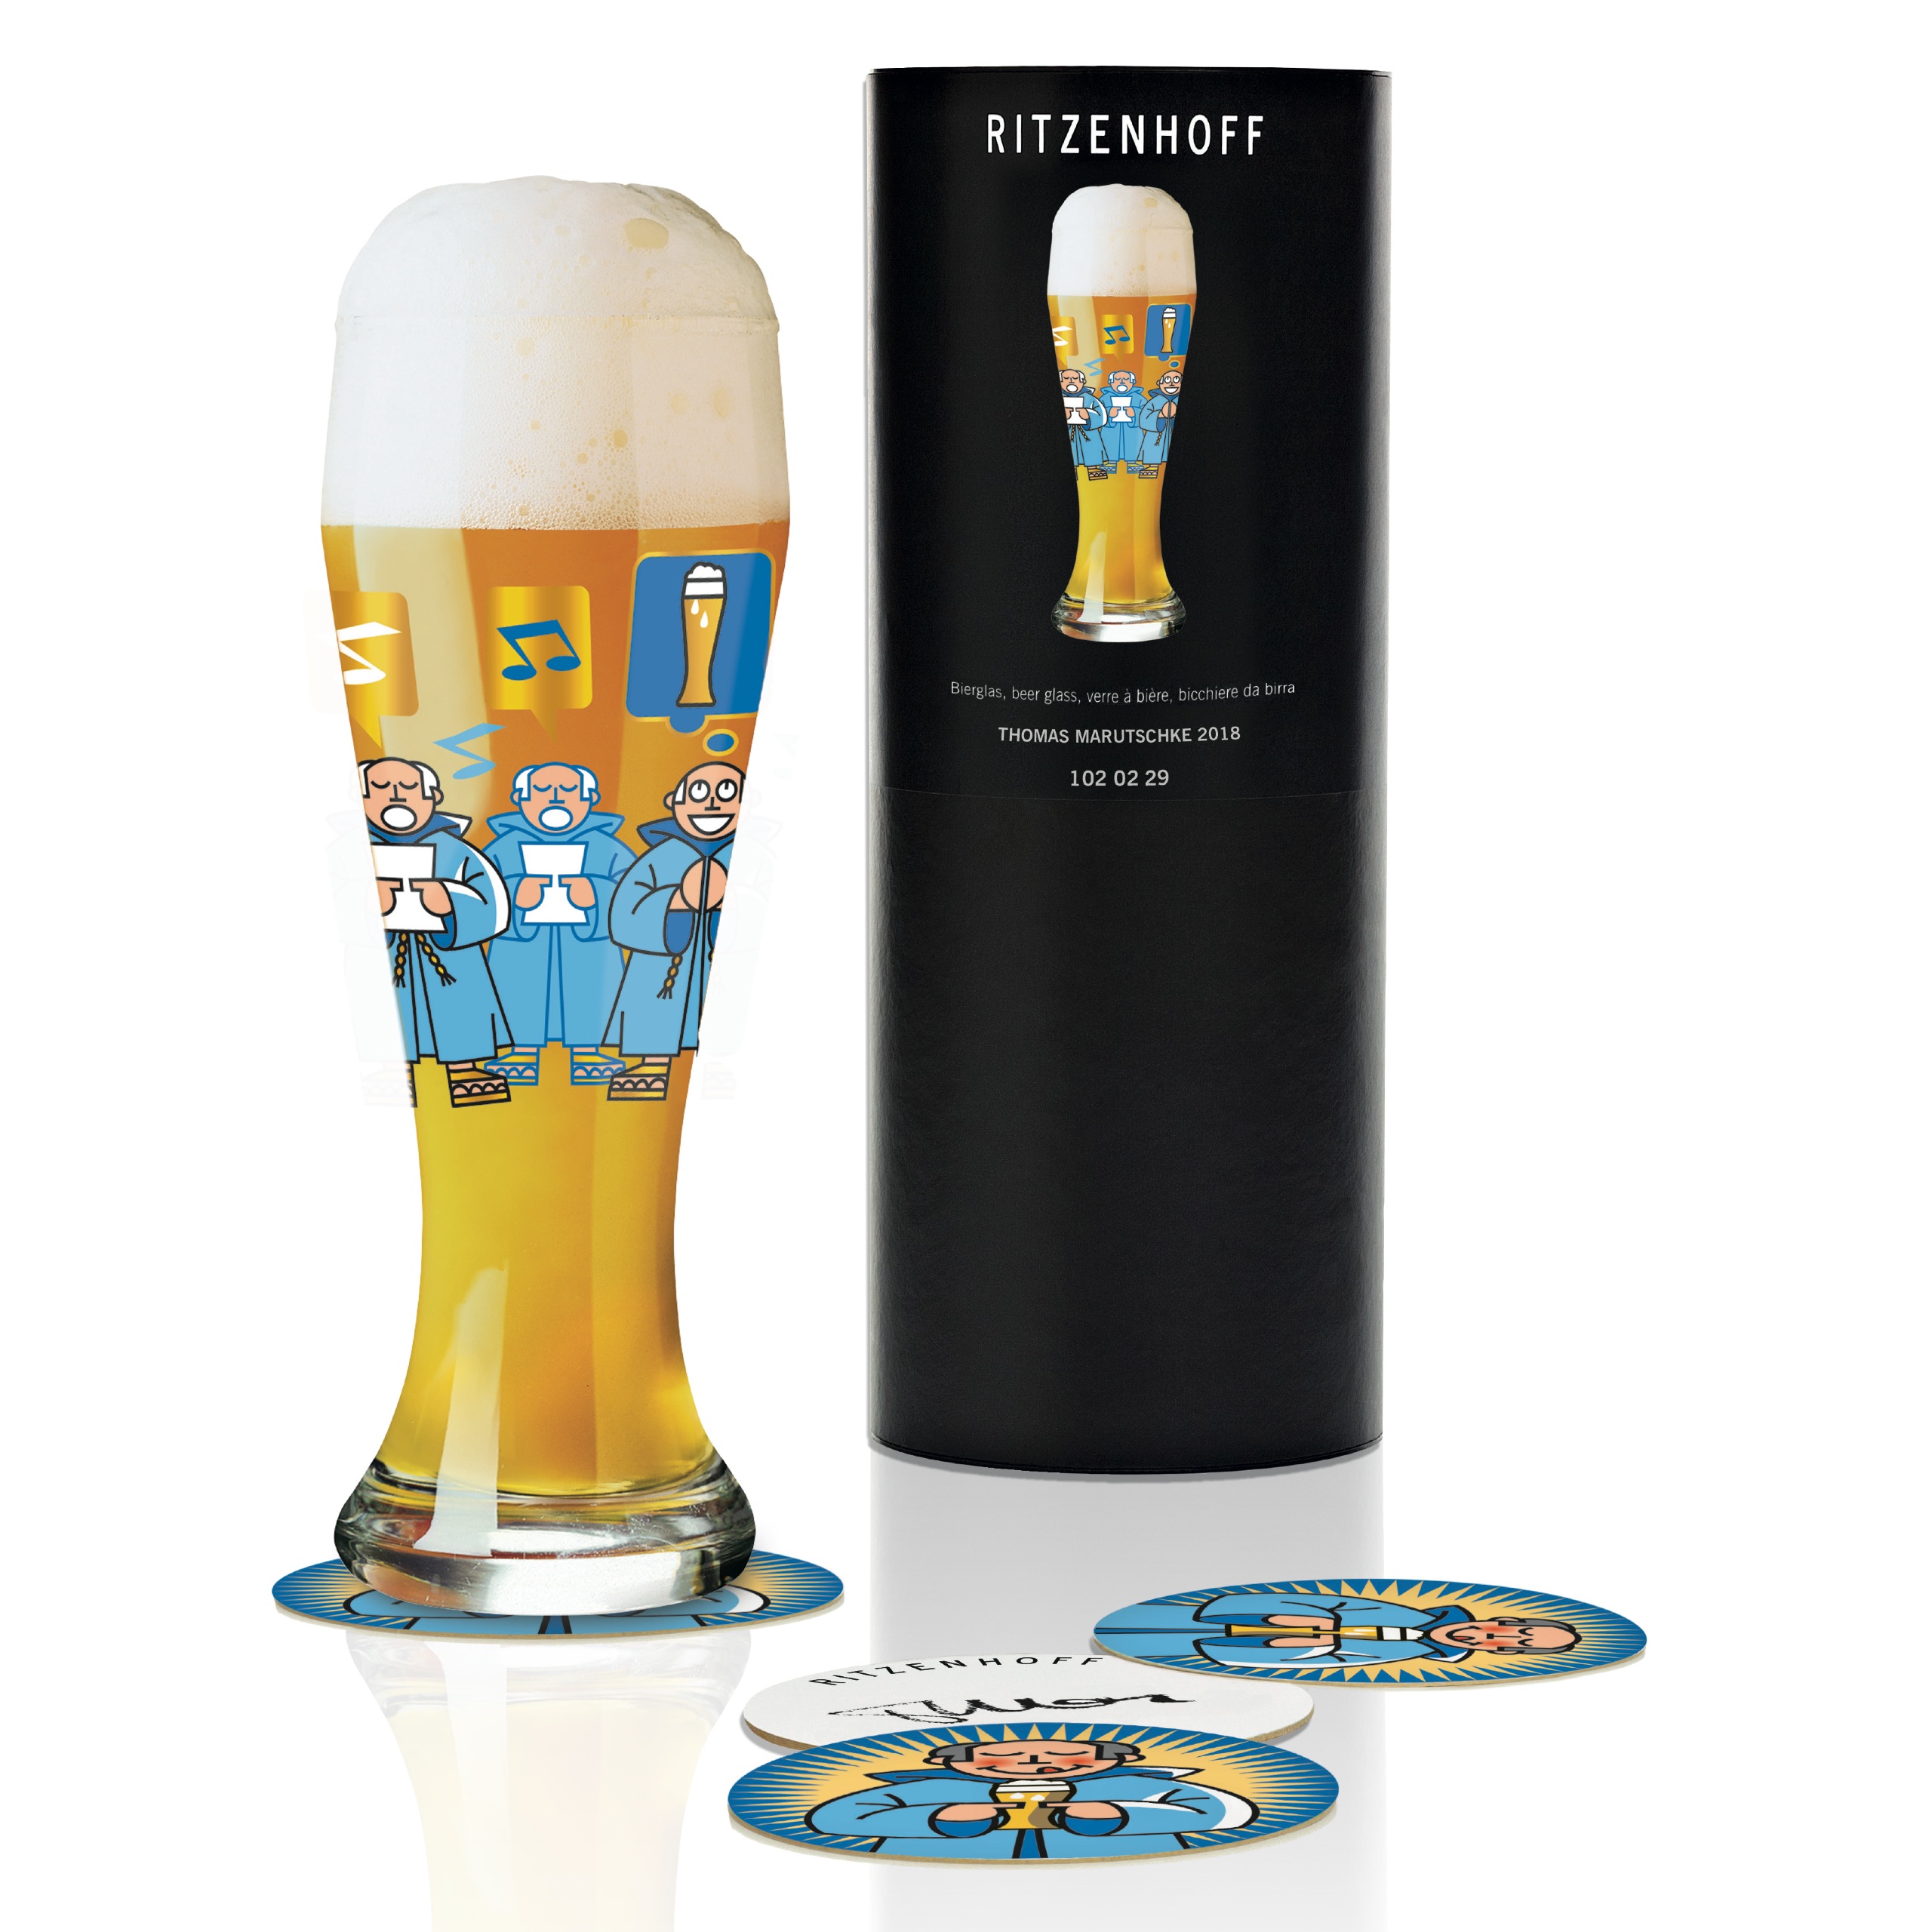 Ritzenhoff Wheat Beer beer glass – Marutschke Box by Direct T. Craft 2018